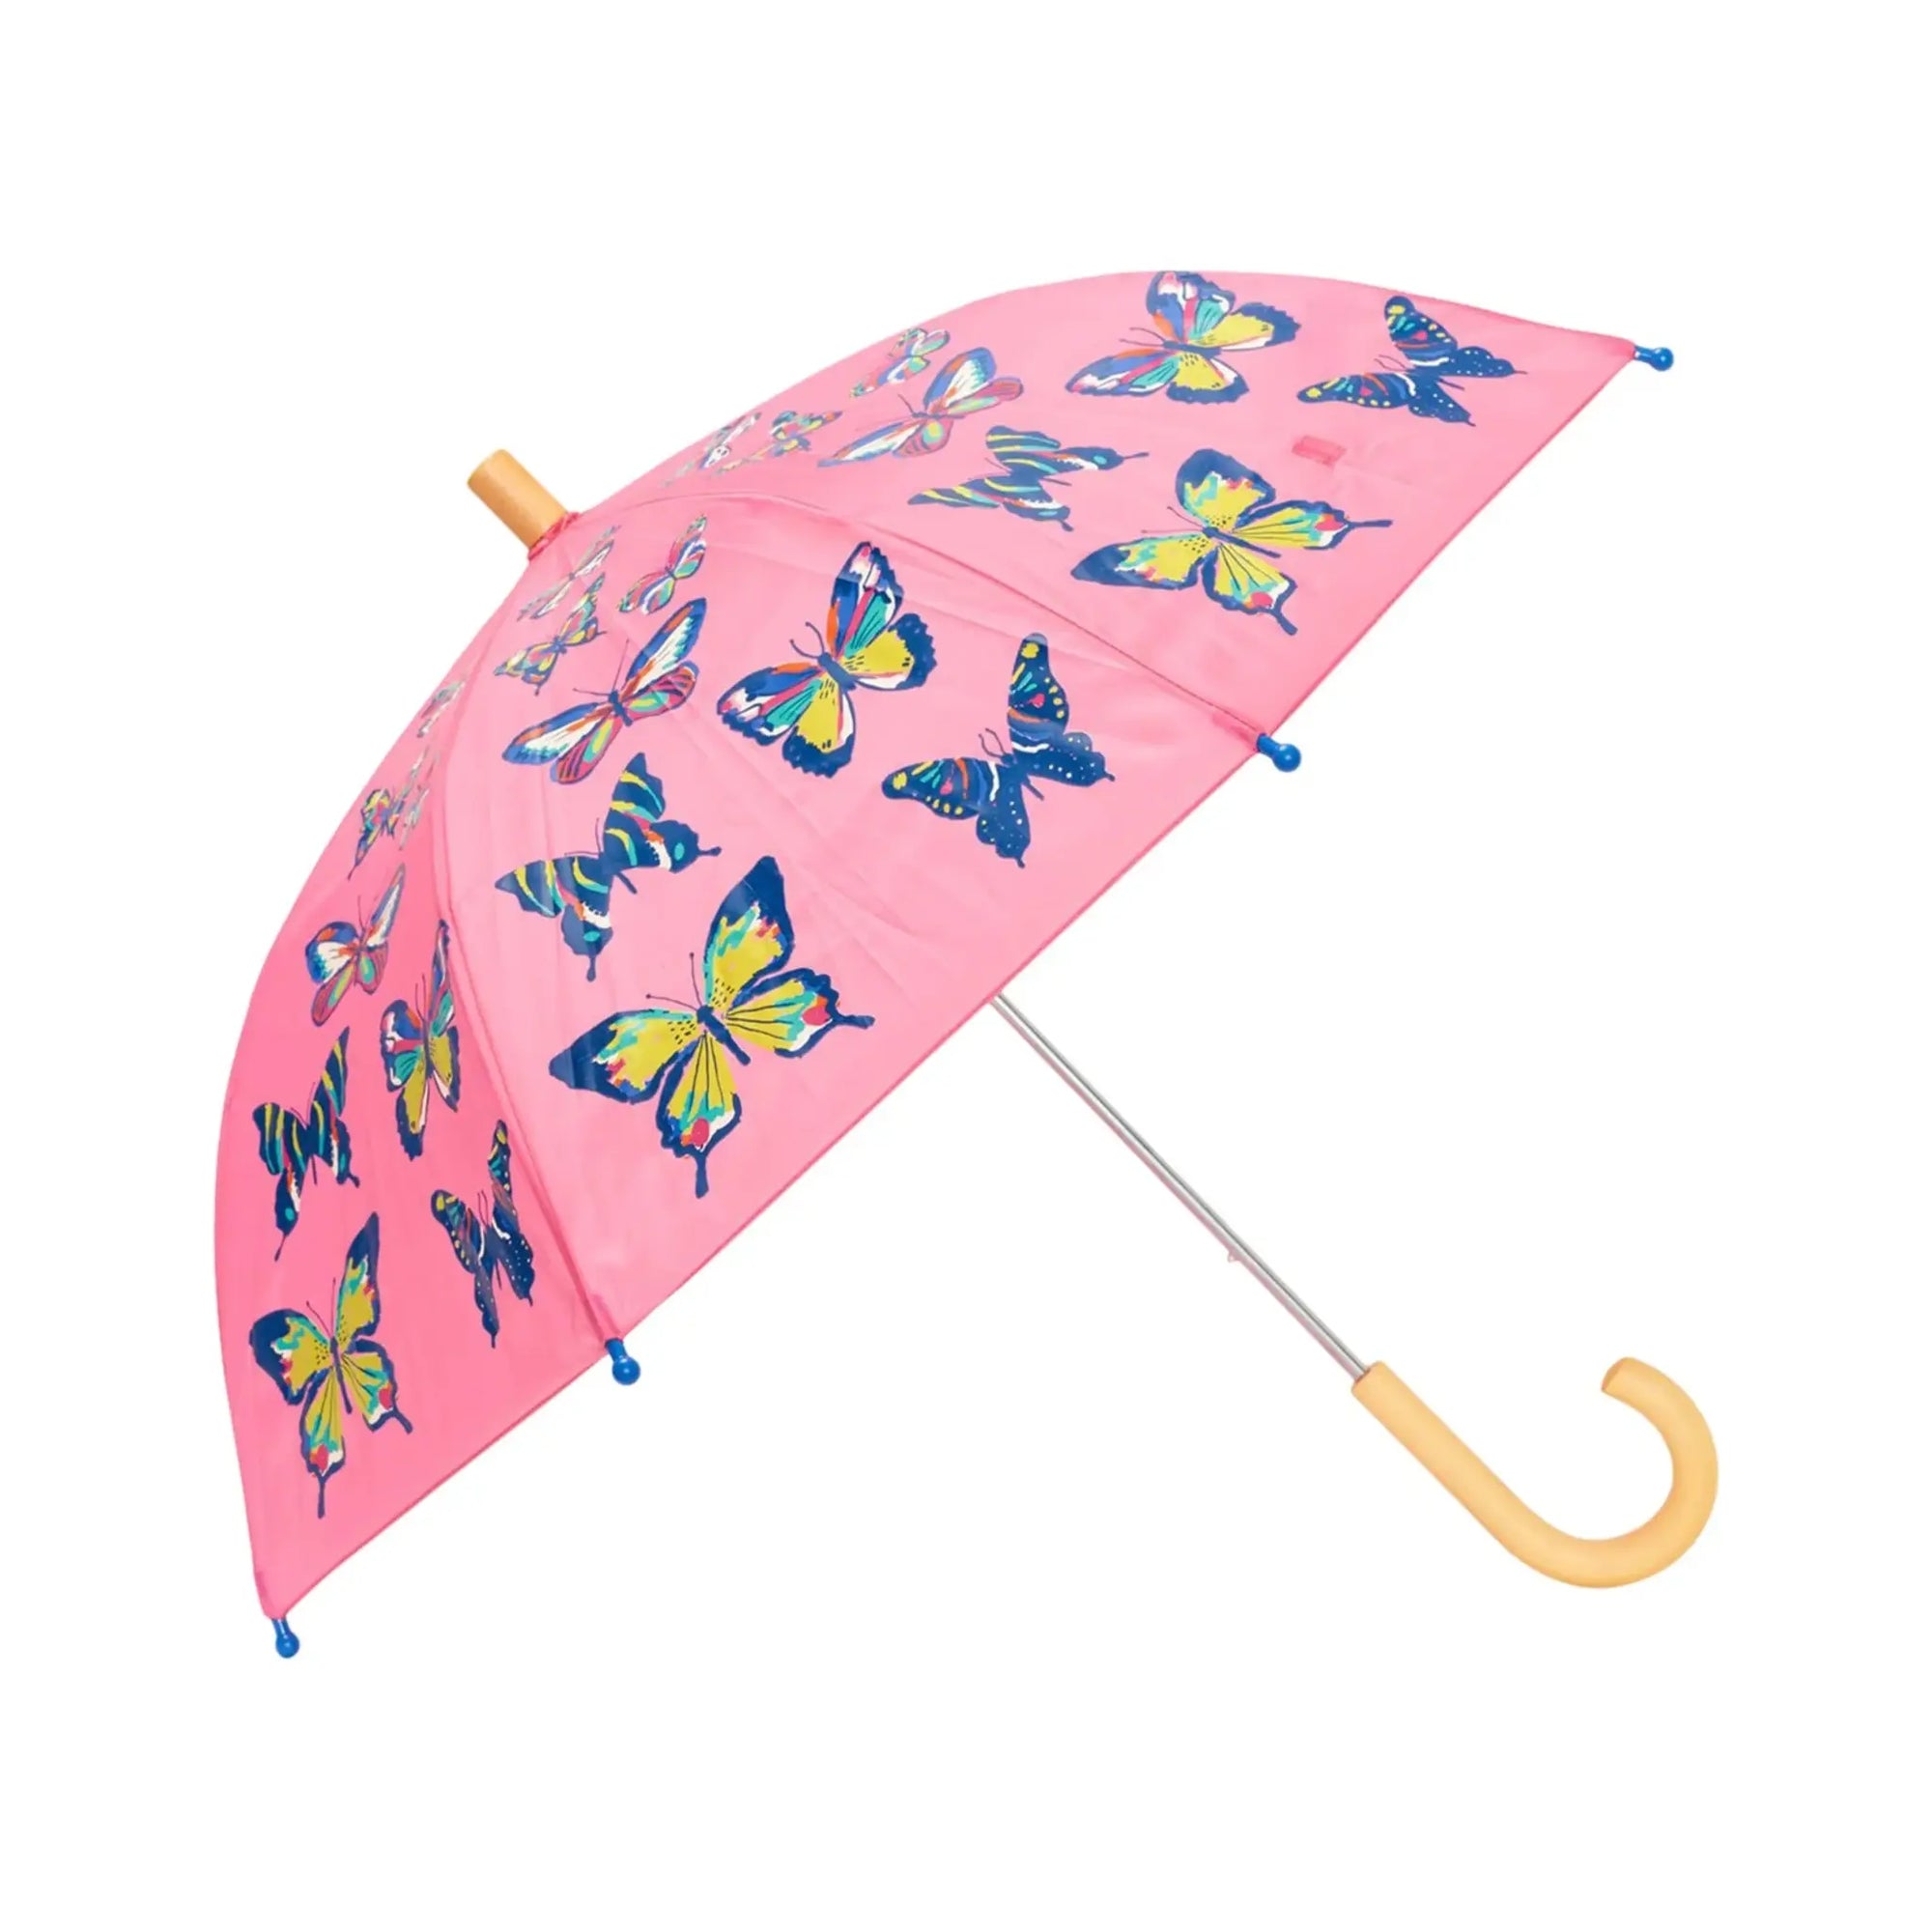 Hatley Vibrant Butterflies Umbrella - Pink Carnation